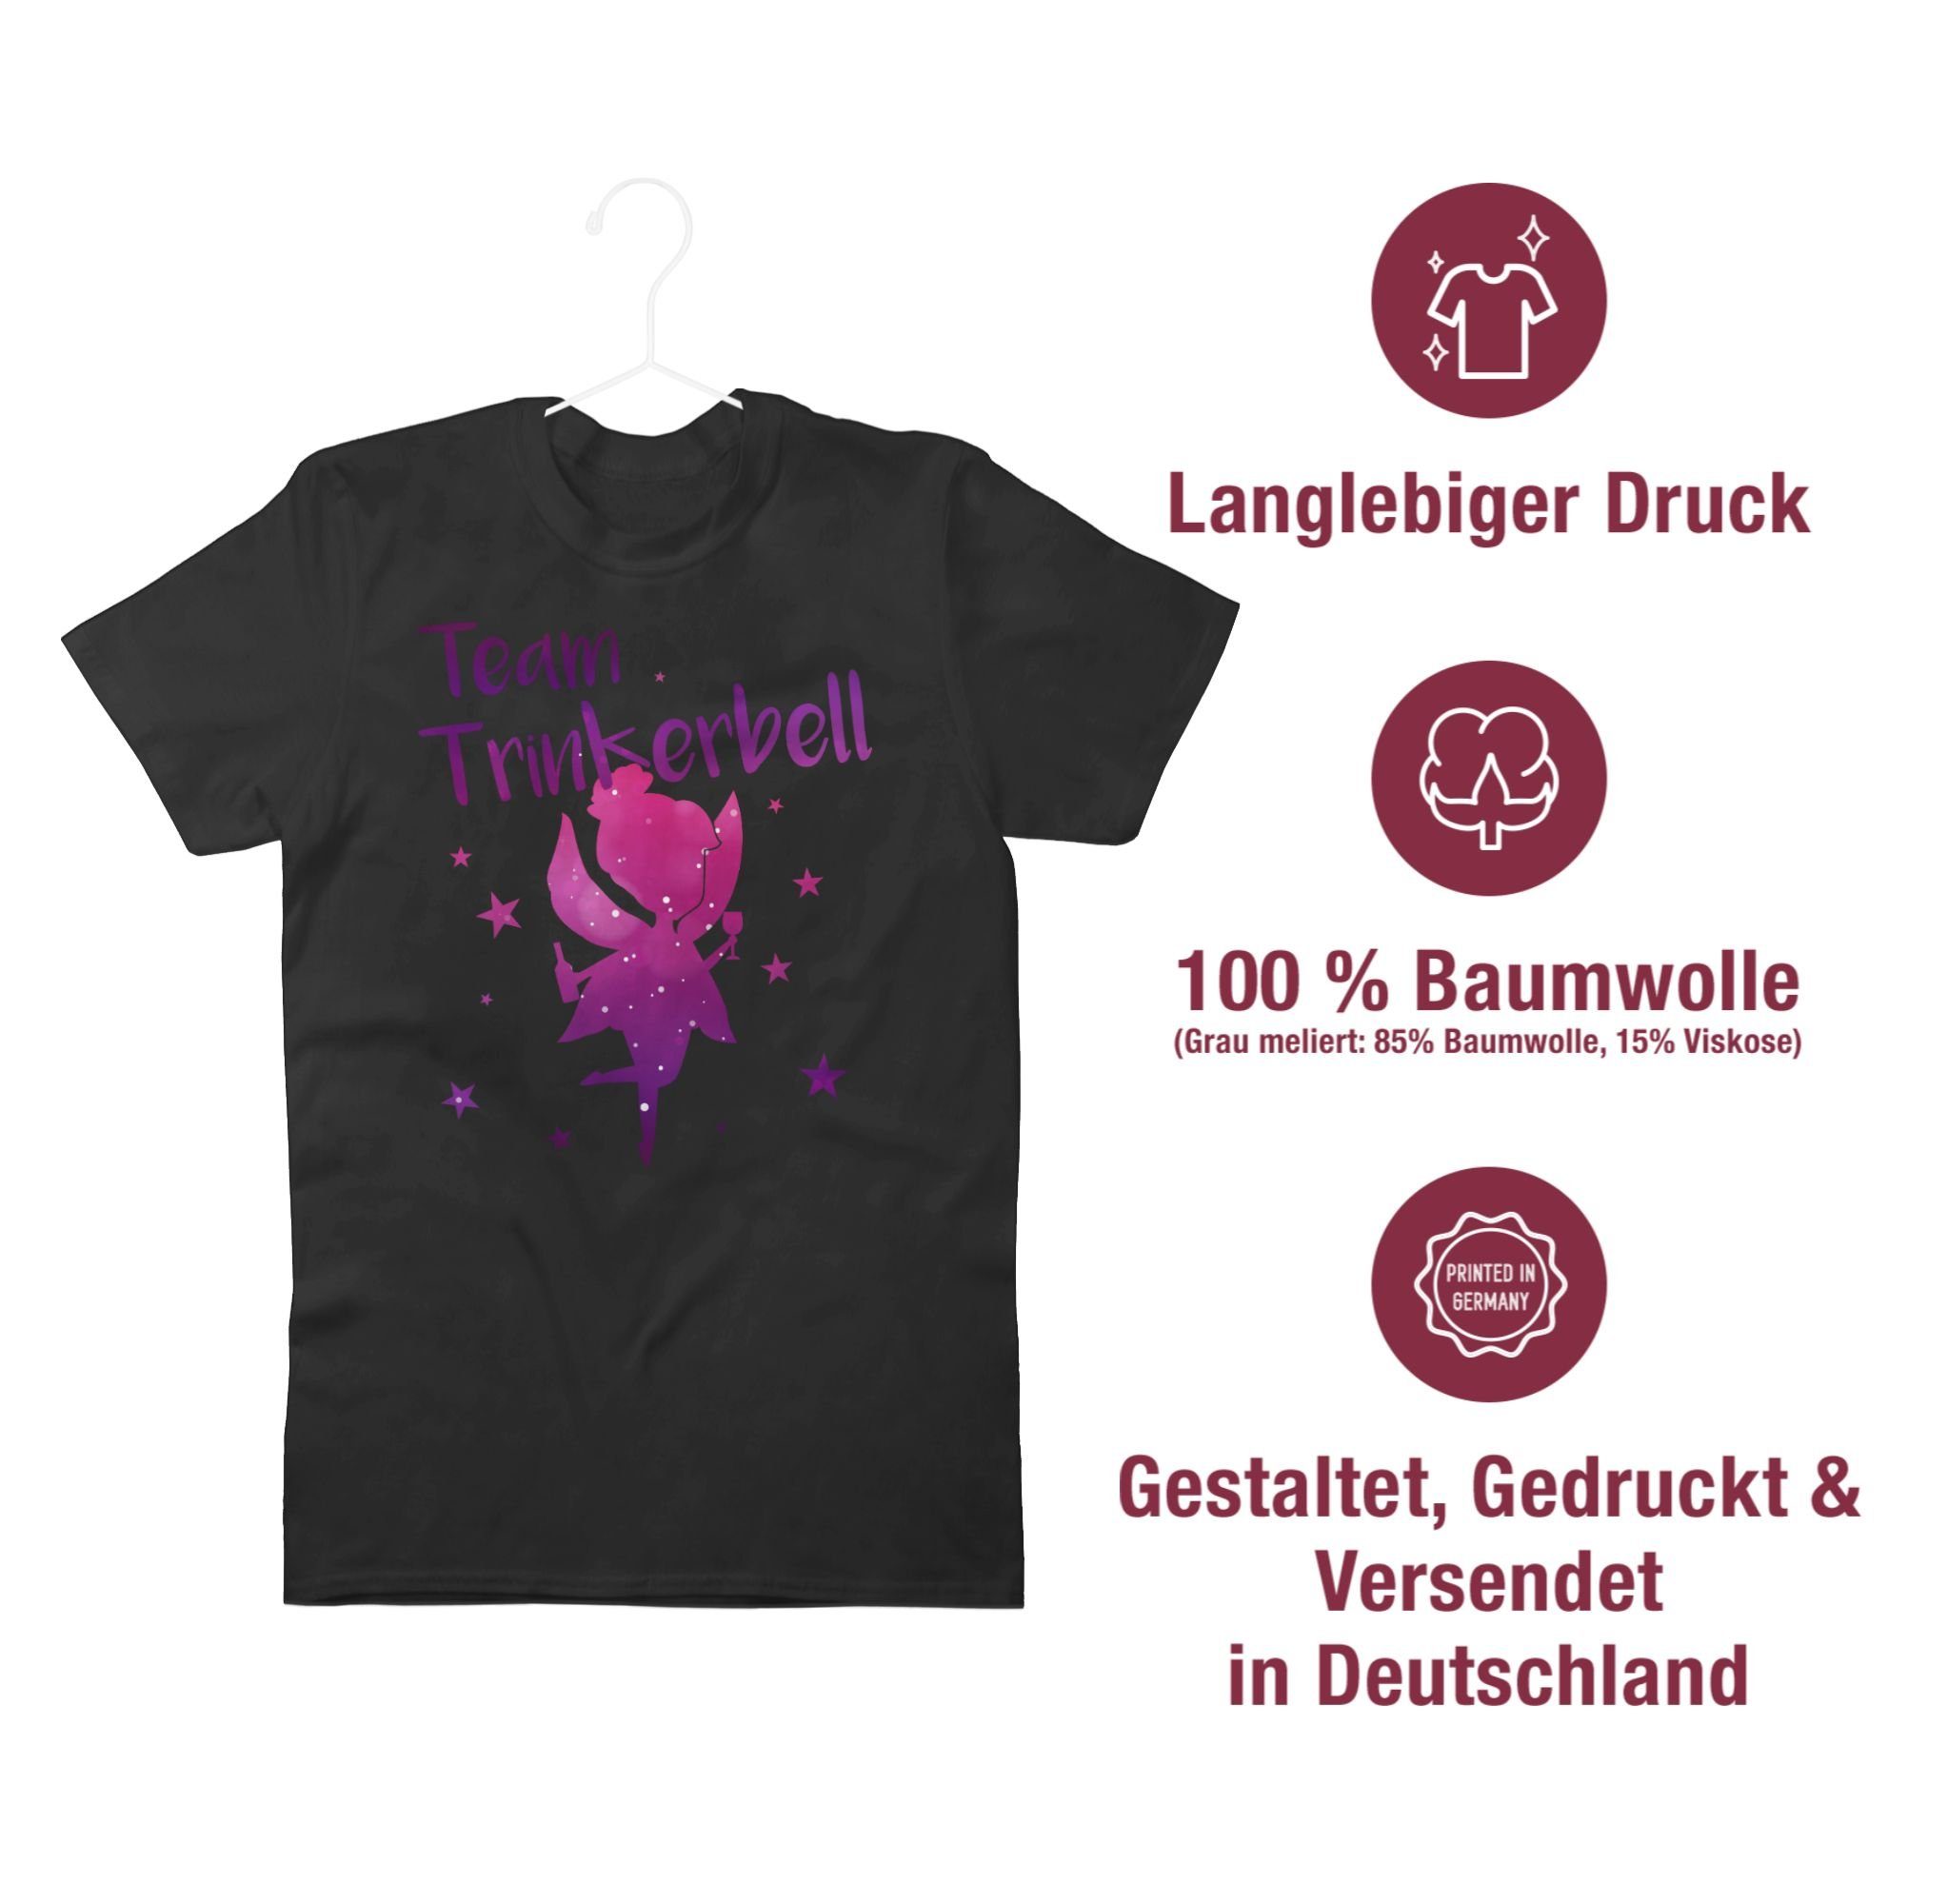 Schwarz - Trinkerbell Karneval Team Shirtracer 1 T-Shirt Outfit